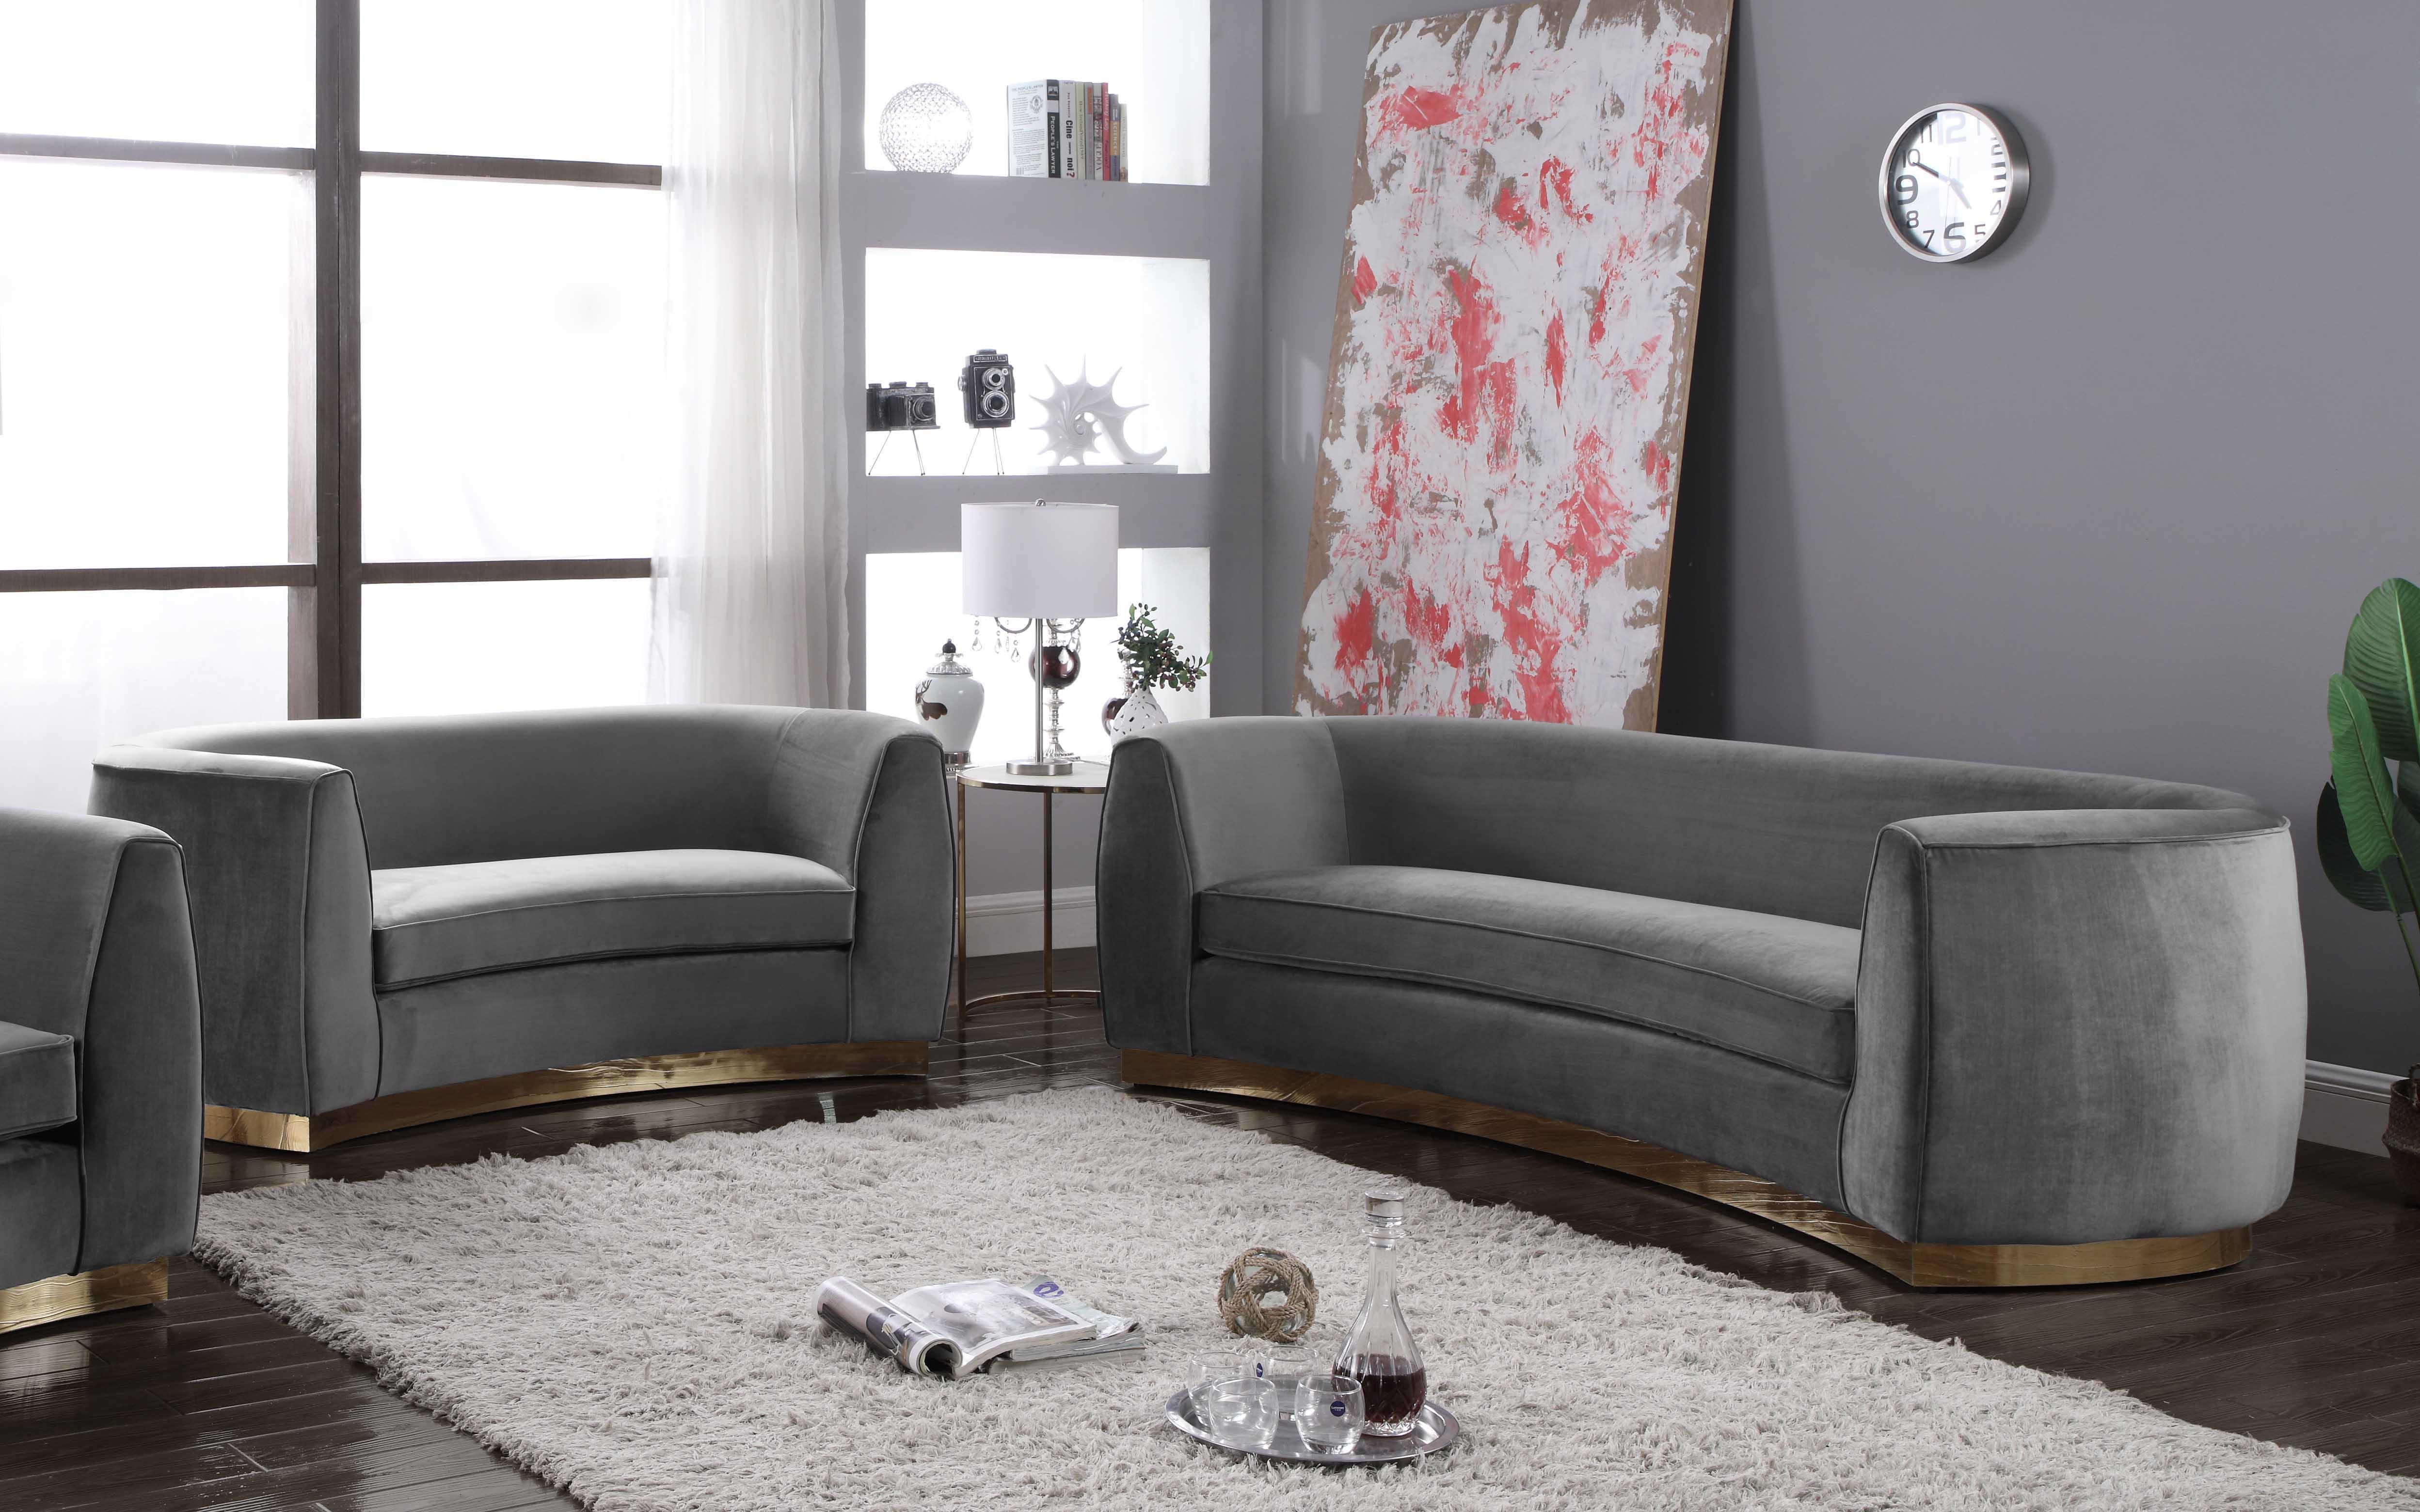 Contemporary, Modern Sofa Set Julian 620Grey-S-Set-2 620Grey-S-Set-2 in Gray Soft Velvet